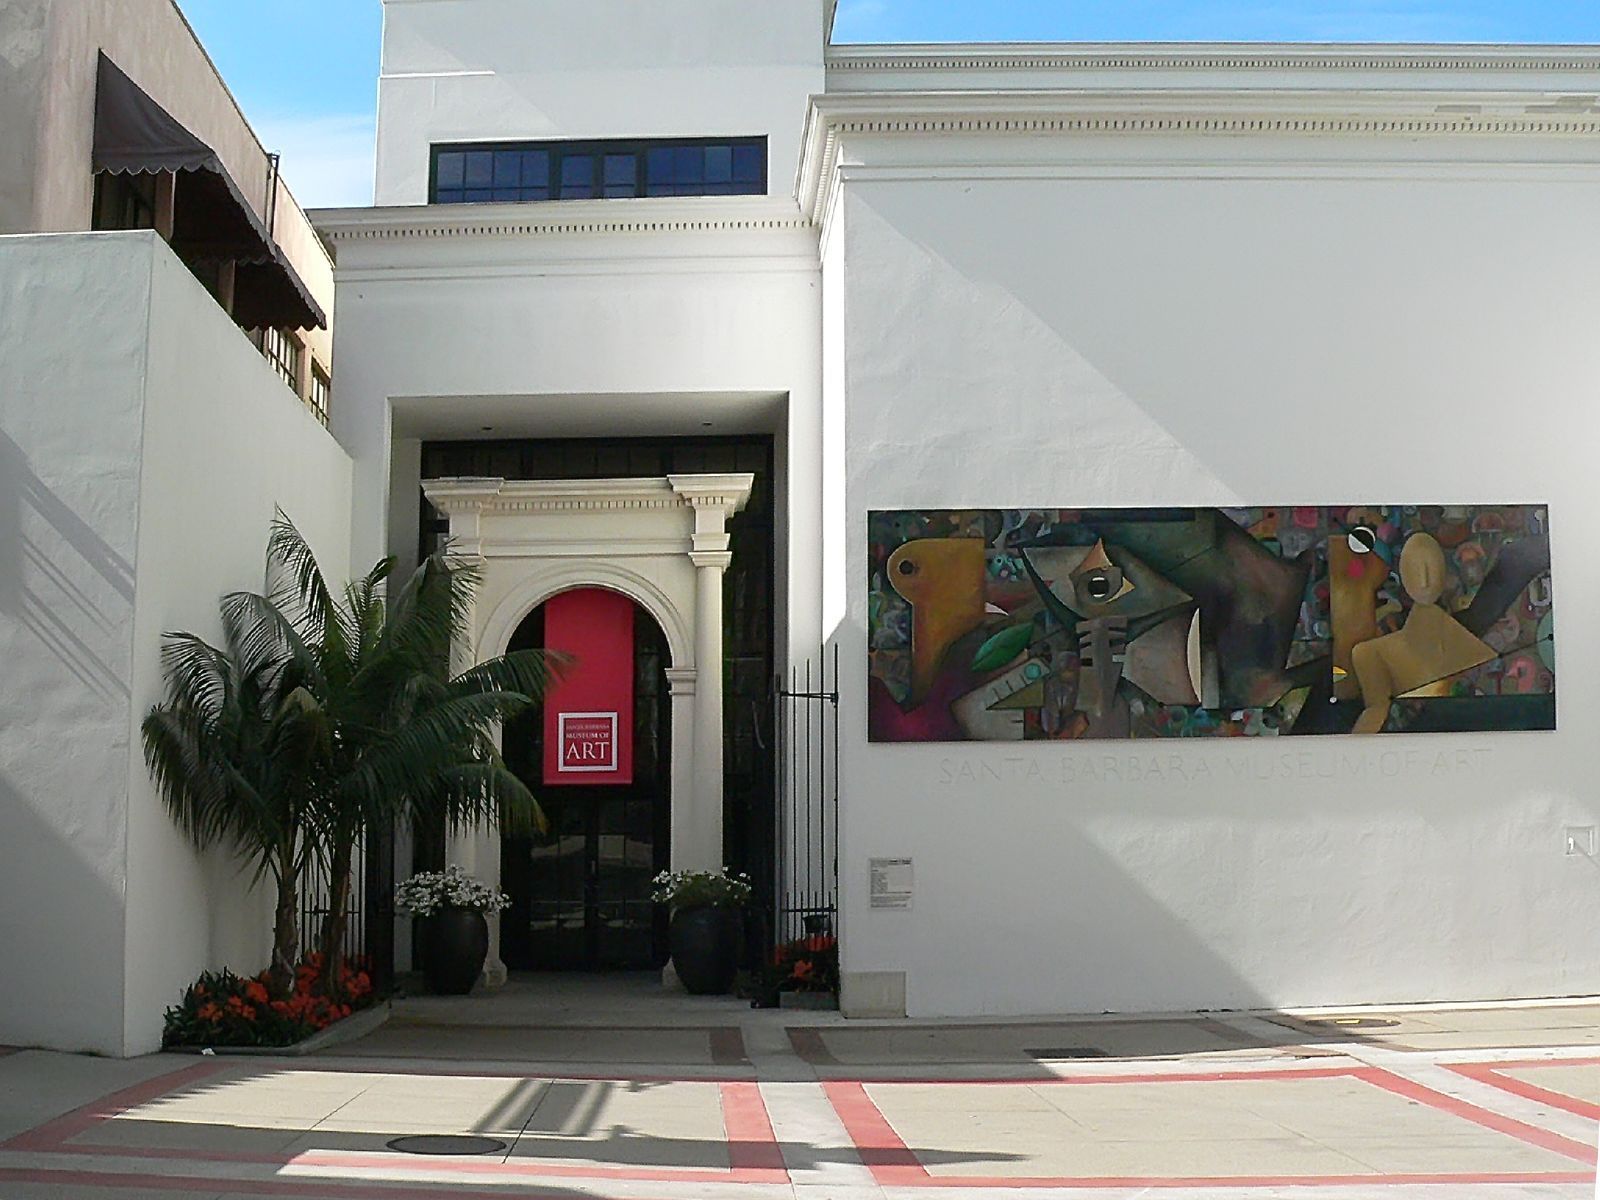 The door to the Santa Barbara Museum of Art